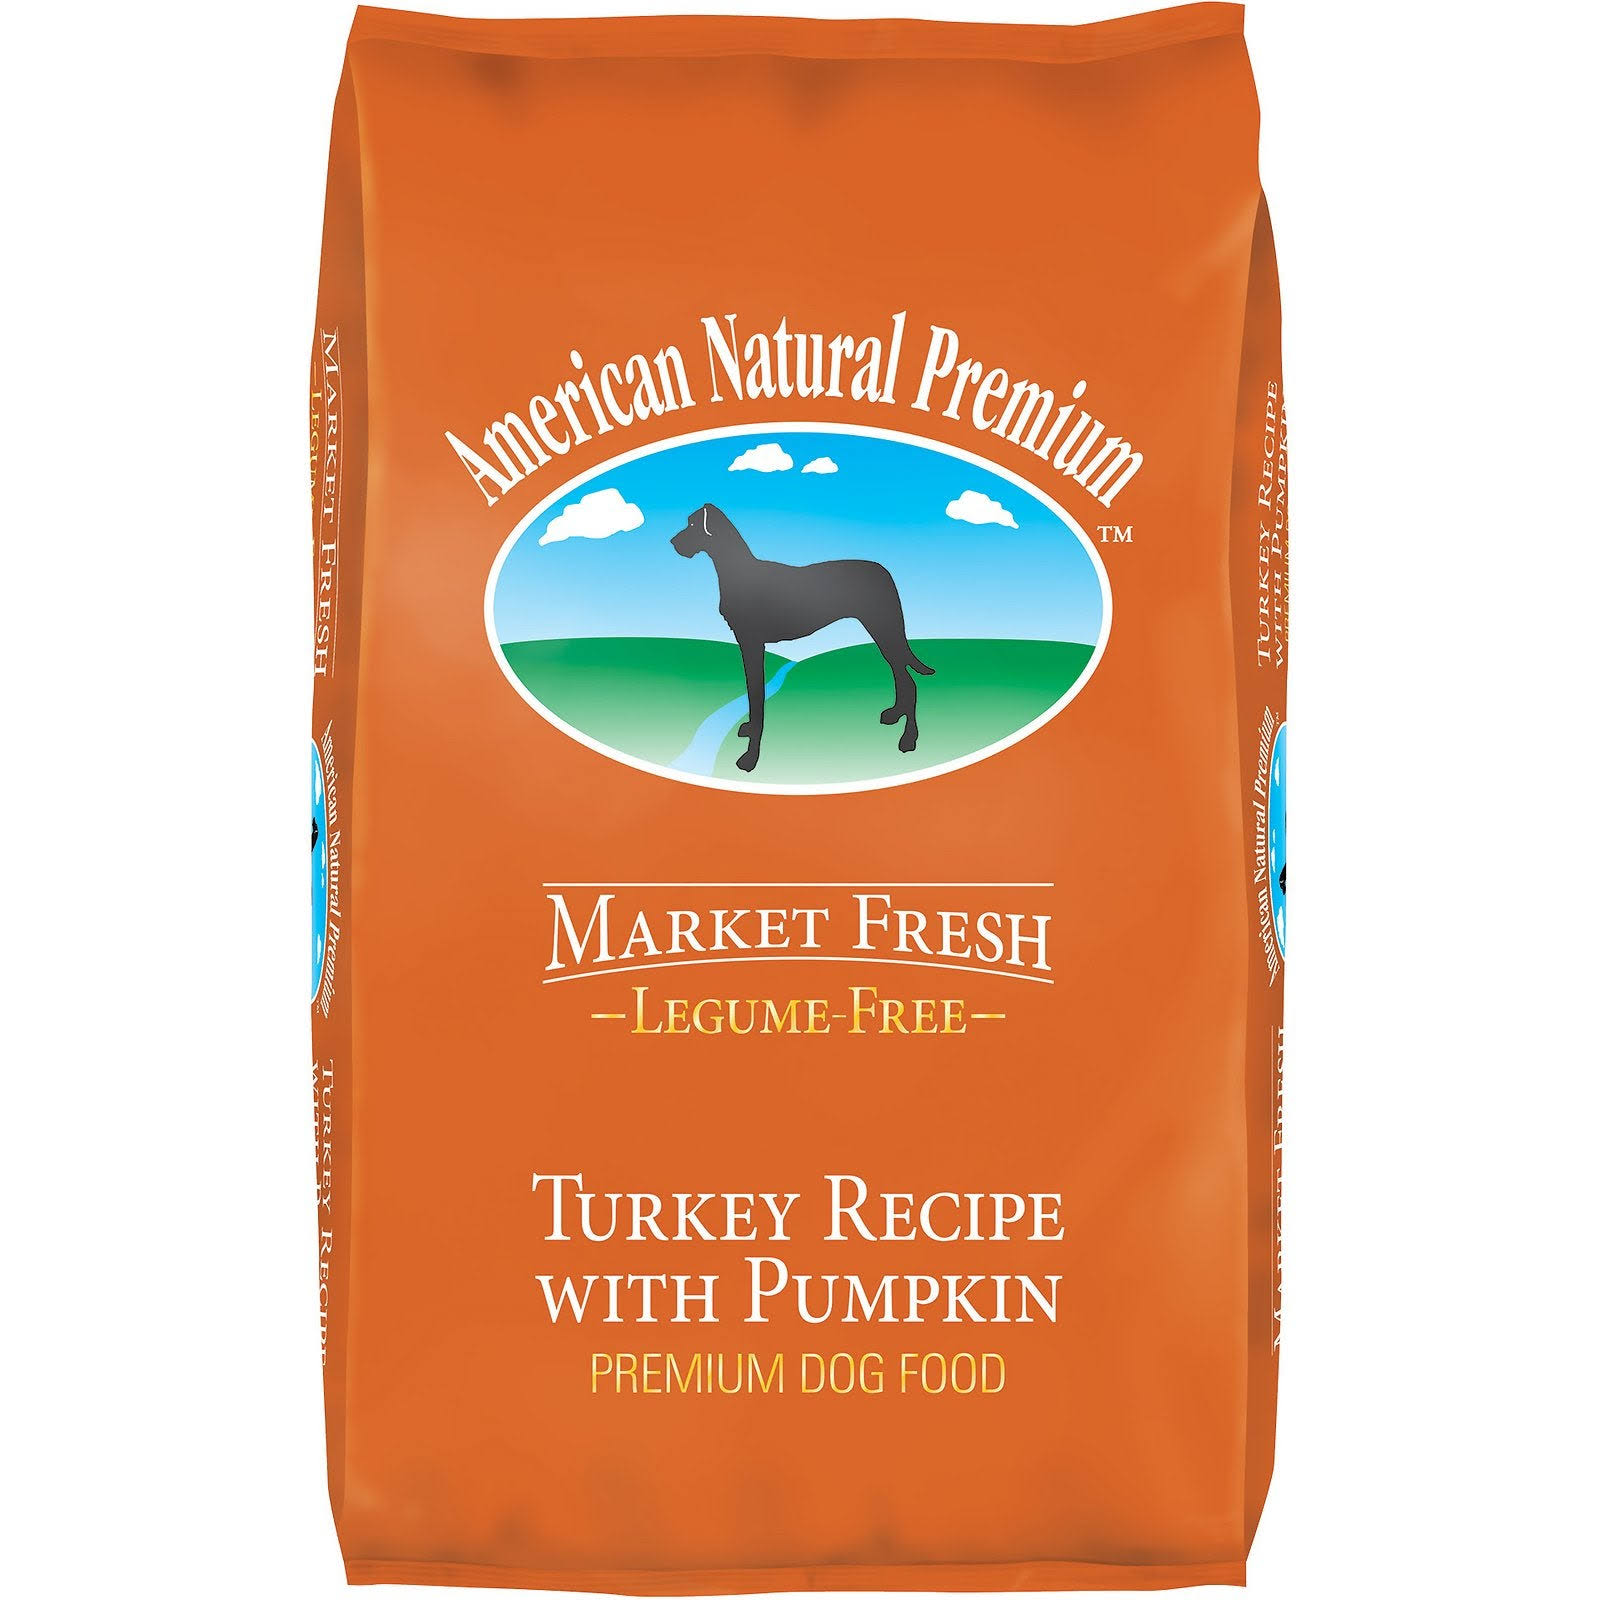 American Natural Premium Turkey with Pumpkin Recipe Legume-Free Premium Dry Dog Food, 30-lb BAG.